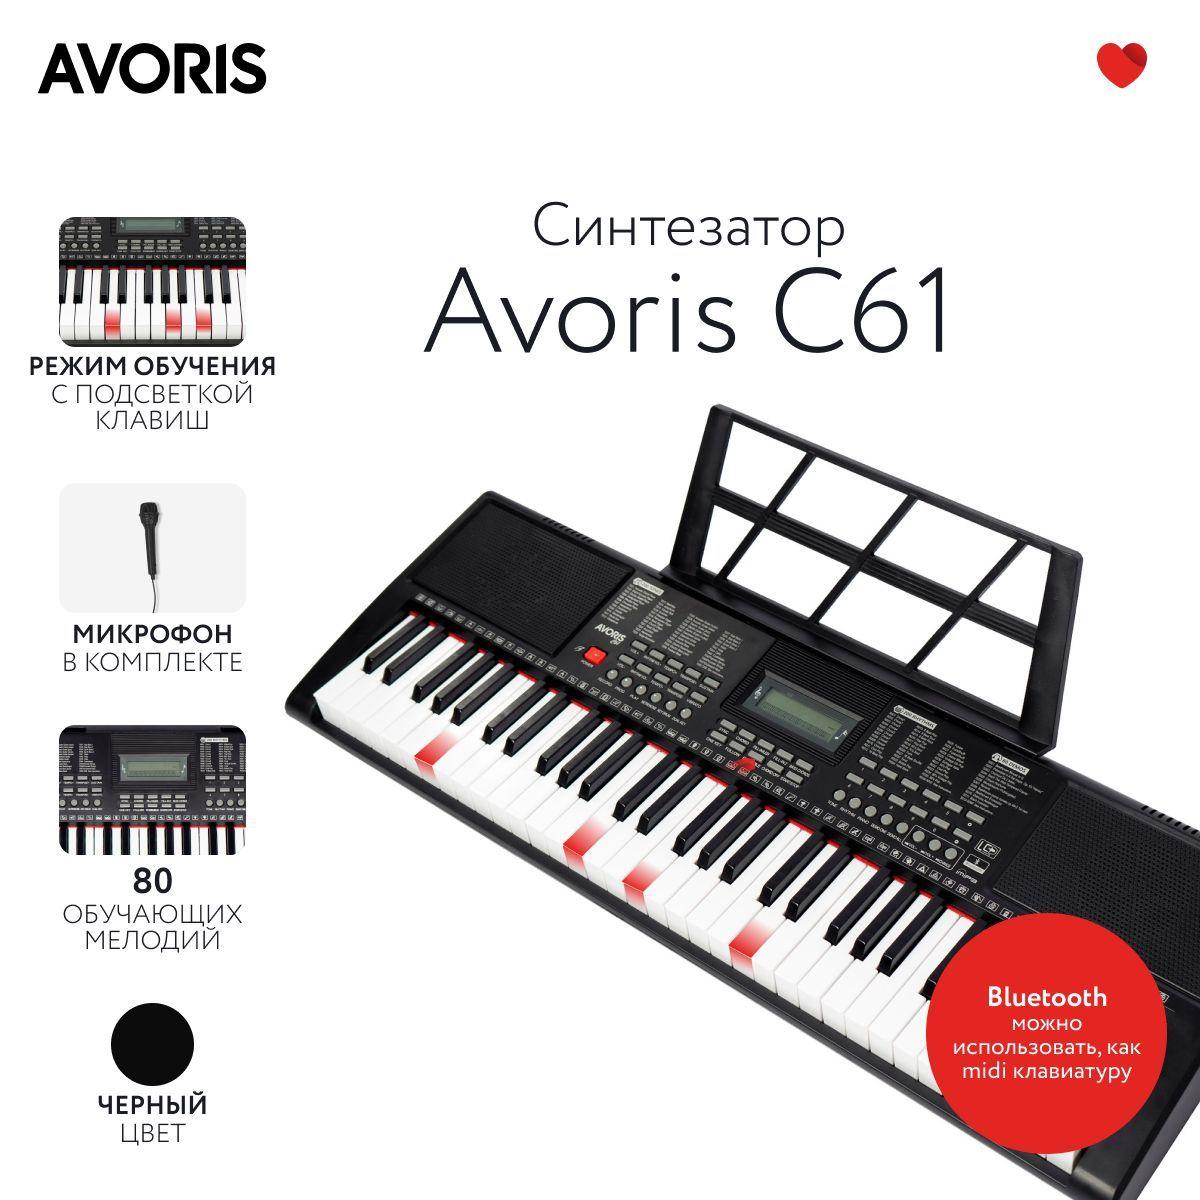 Avoris C61 SET - синтезатор, банкетка, стойка и наушники в комплекте. Синтезатор с подсветкой клавиш и с функцией обучения, midi -клавиатура